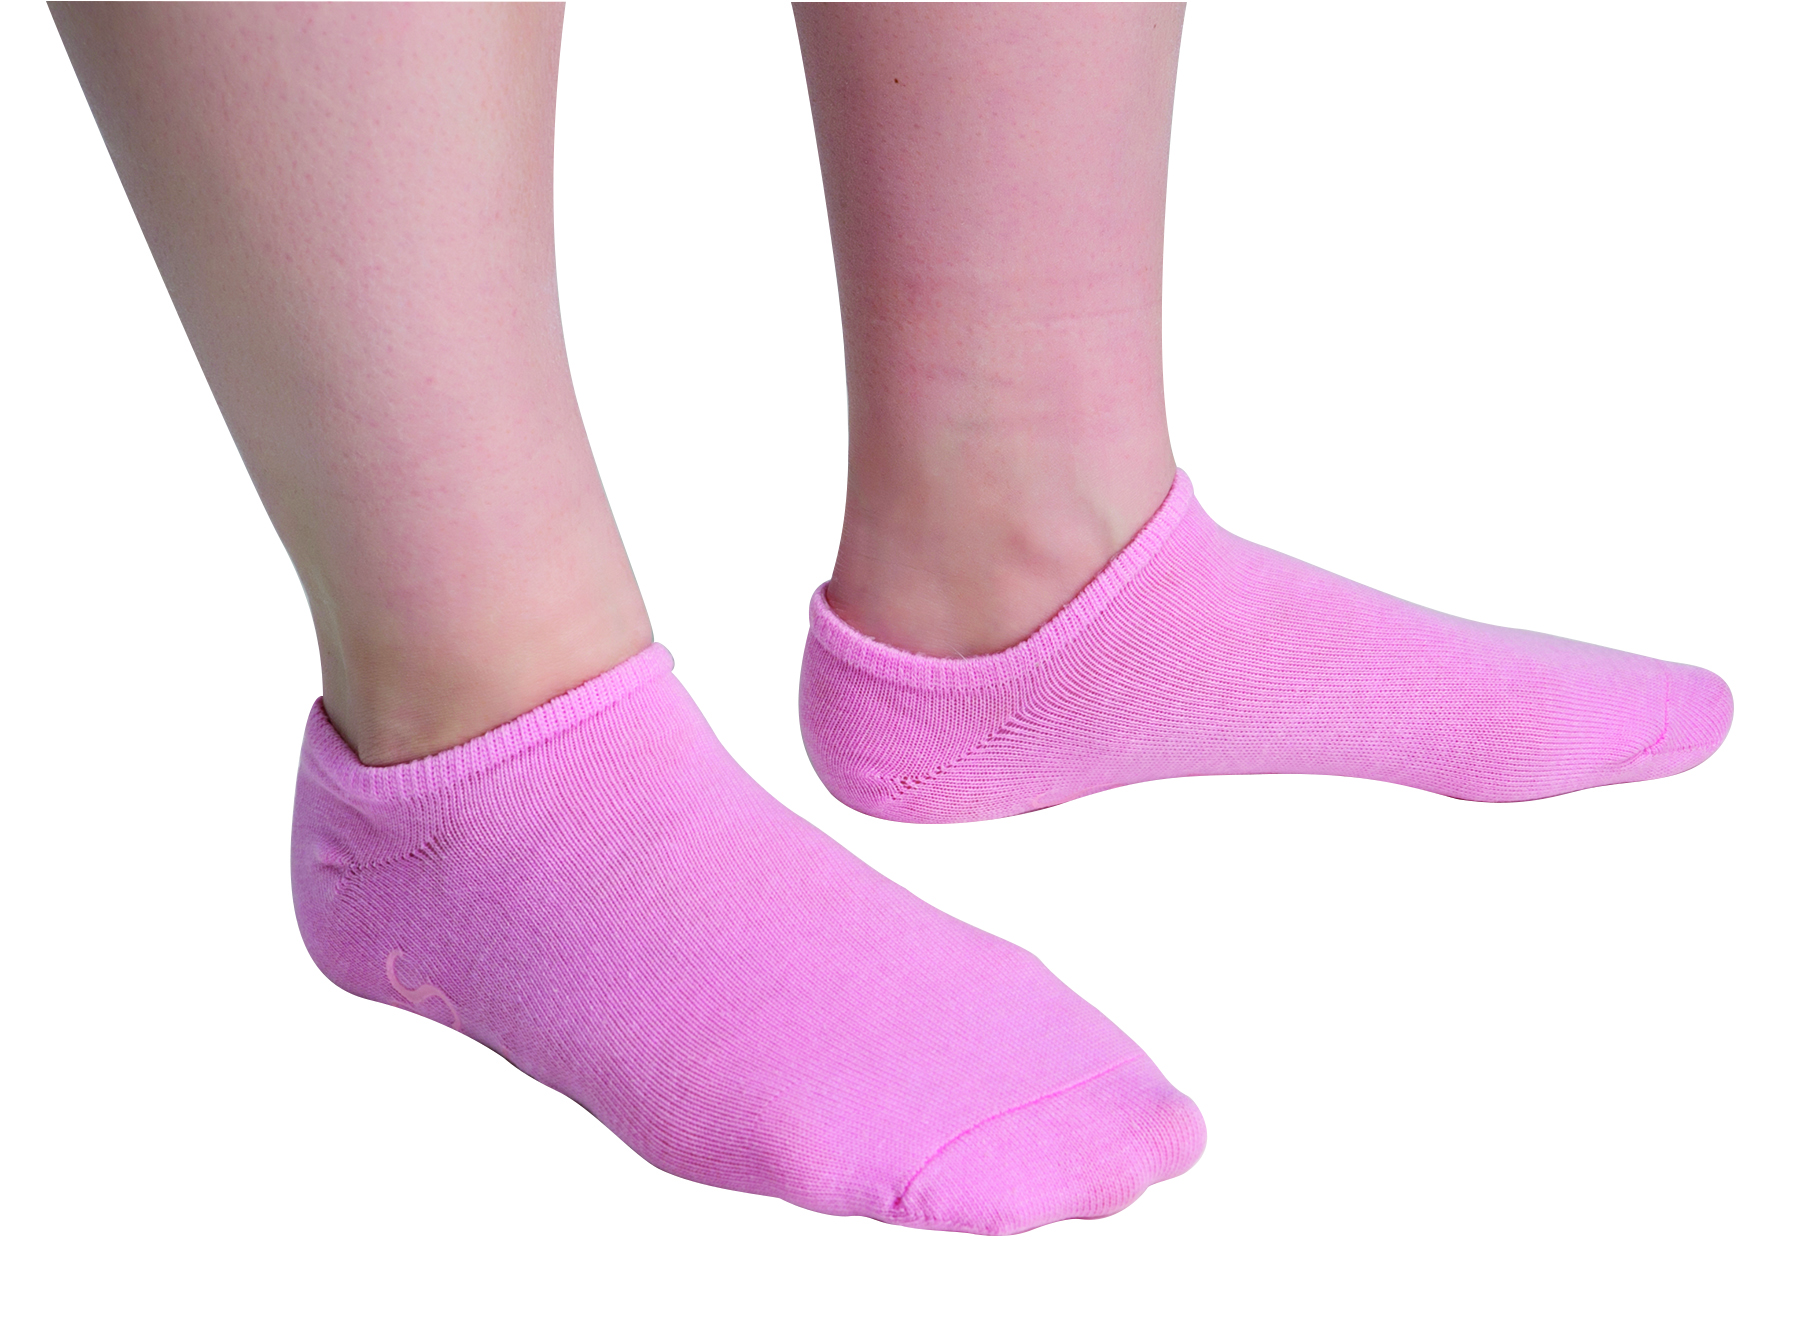 PSC Moisturizing Gel Socks in Pink - Bowers Medical Supply